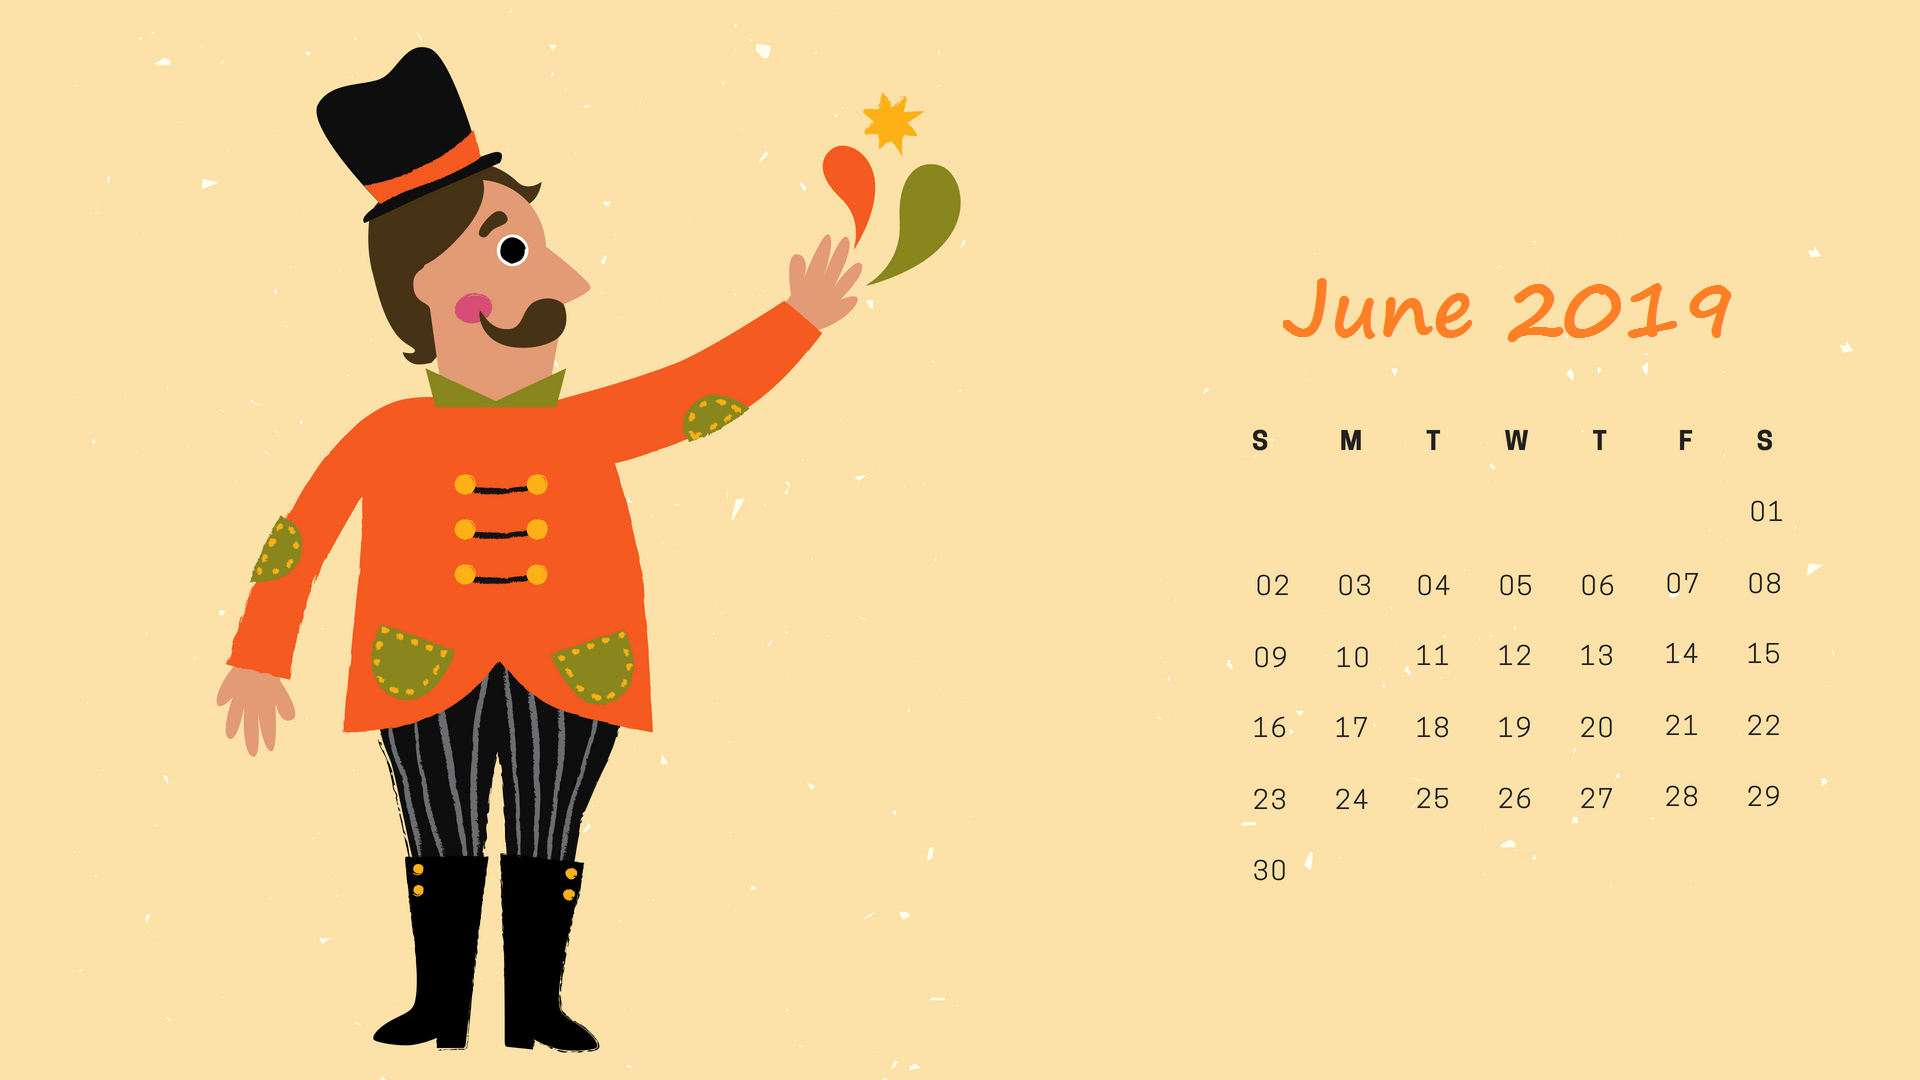 June 2019 Calendar Wallpapers - Wallpaper Cave